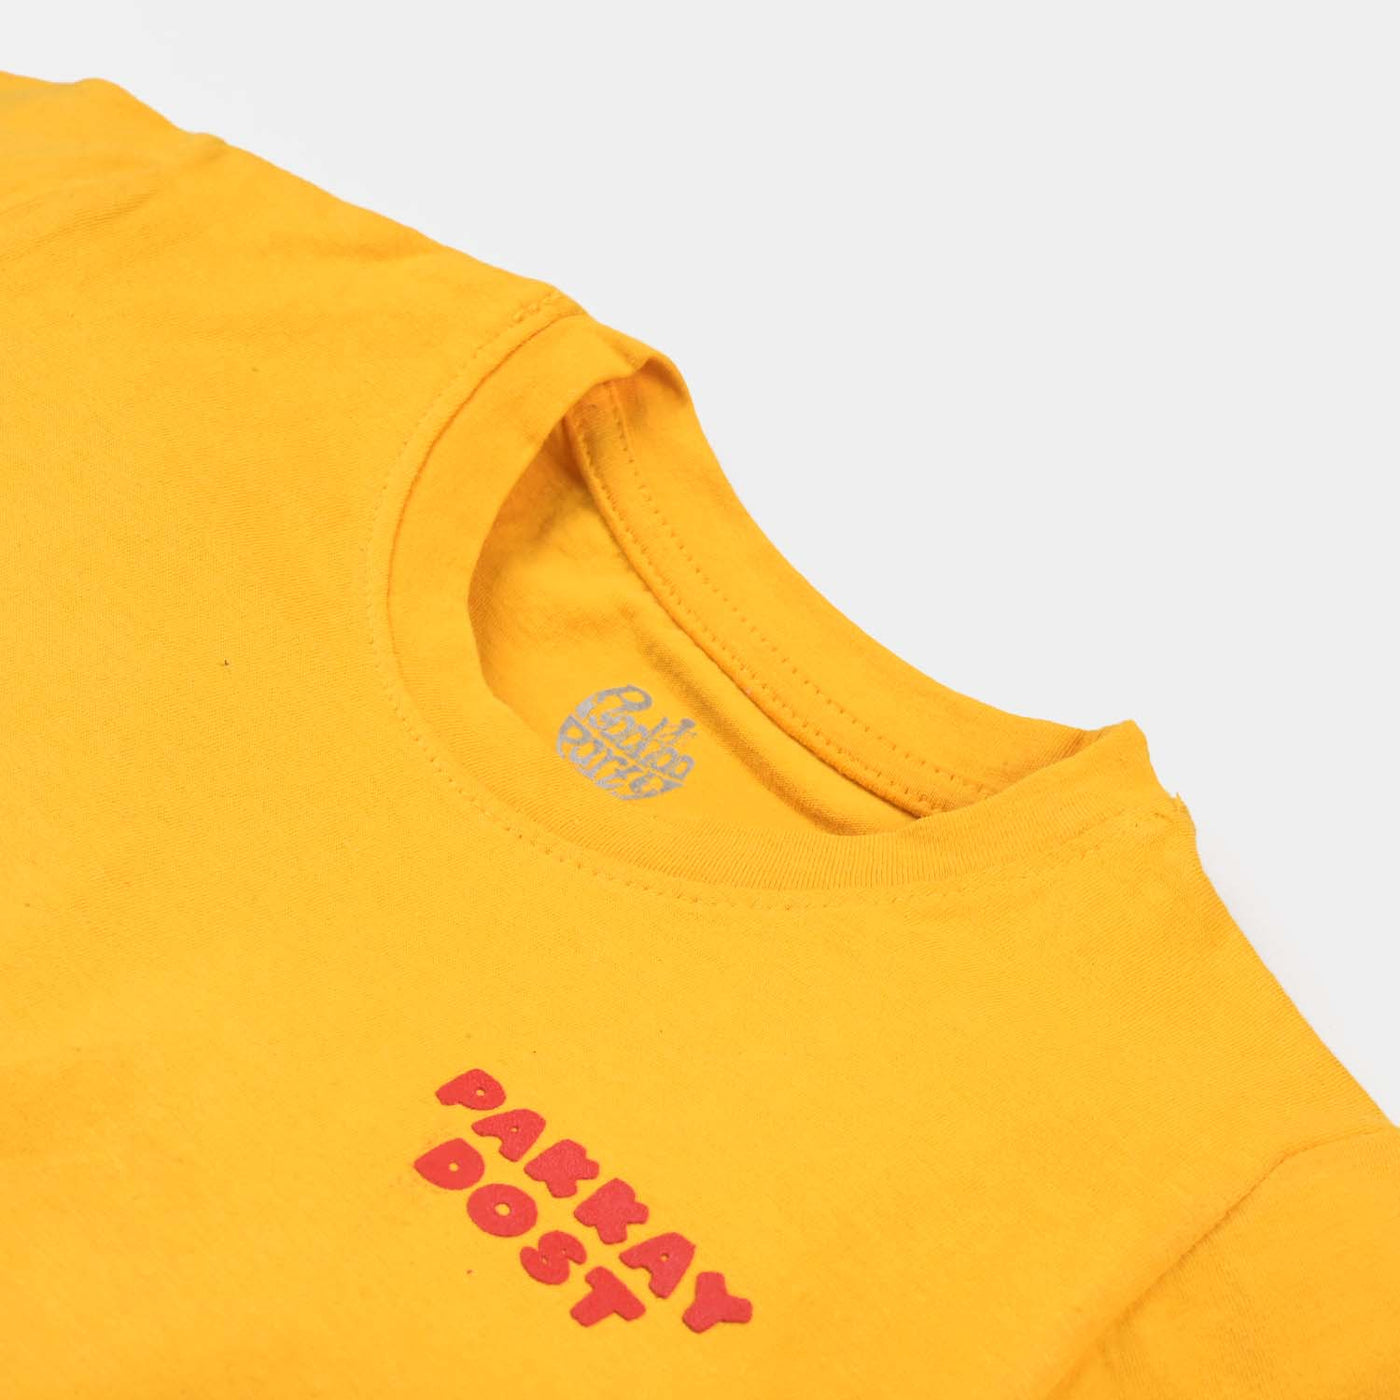 Unisex Cotton Jersey T-Shirt Pakkay Dost LaalBaig Arm Extended - Yellow